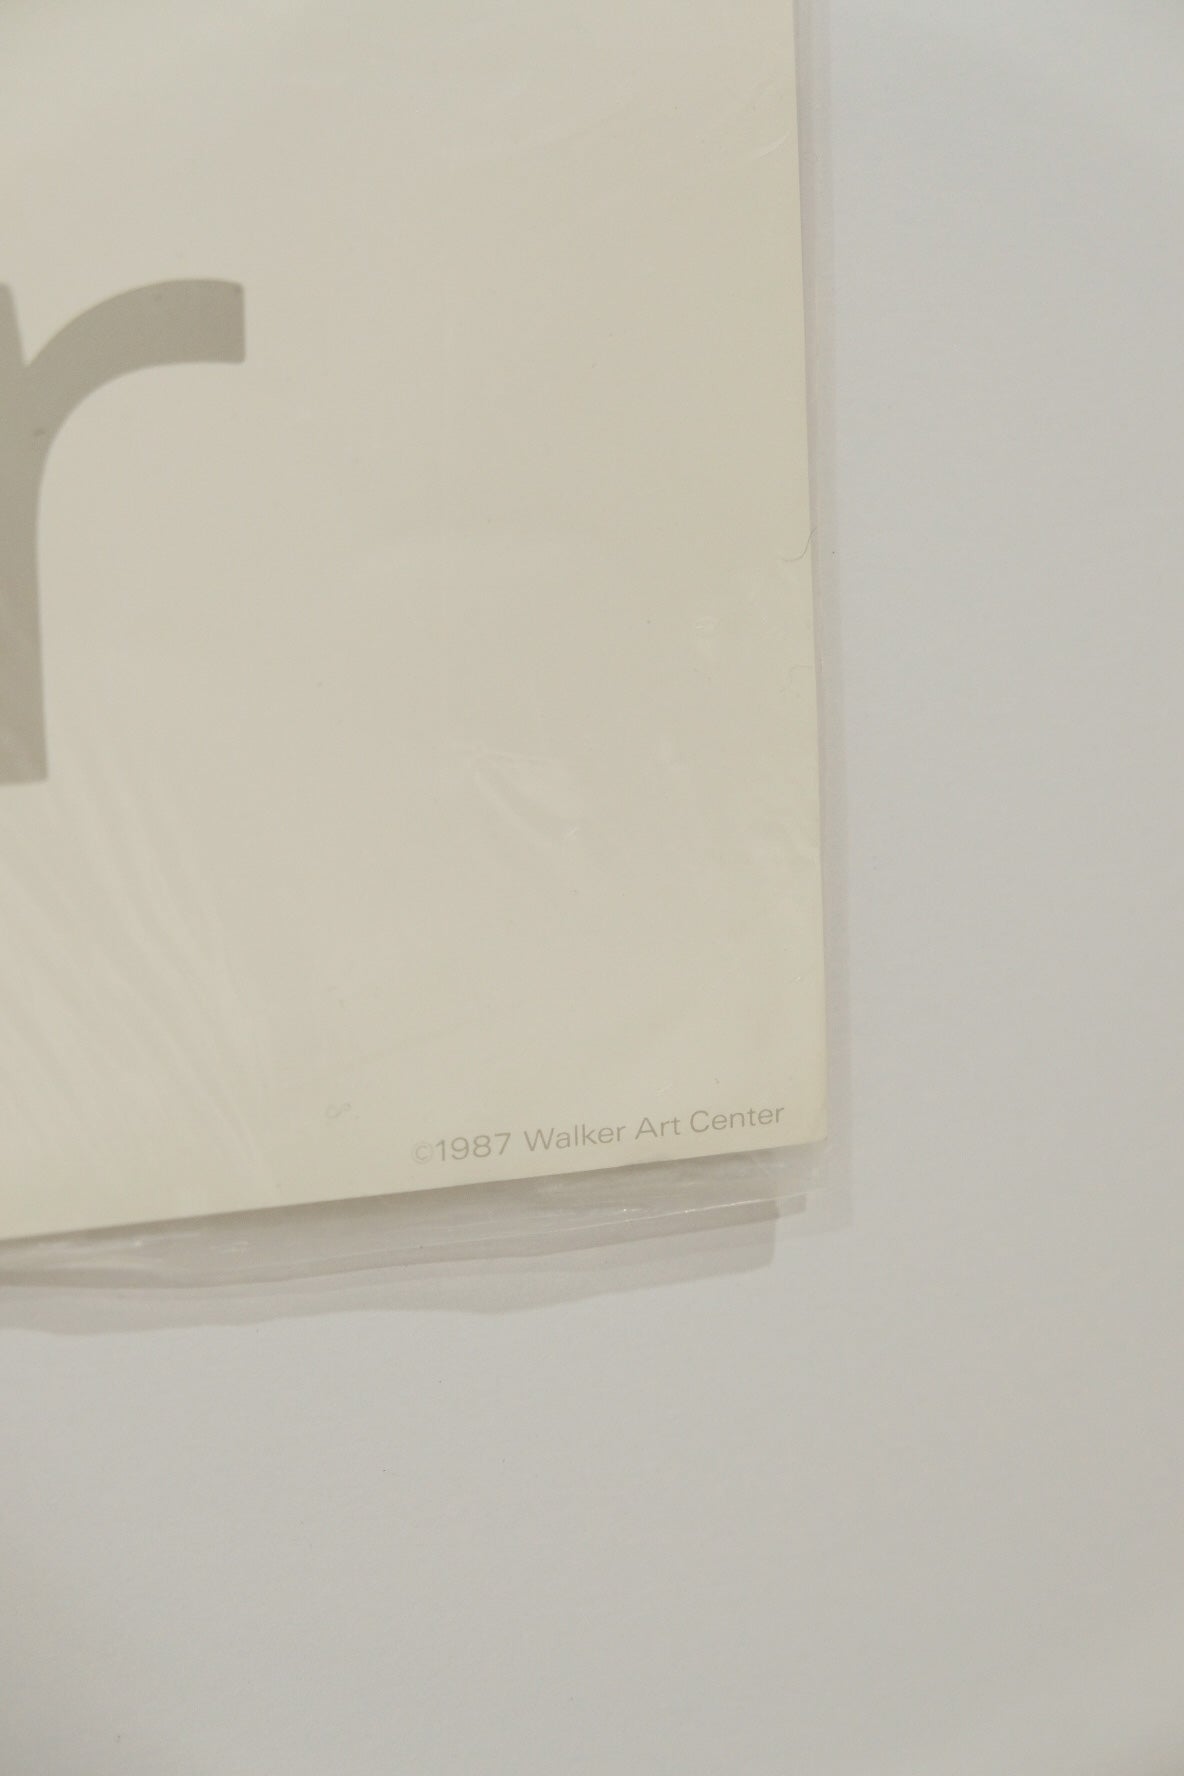 Frank Stella Exhibition Print from Walker Art Center